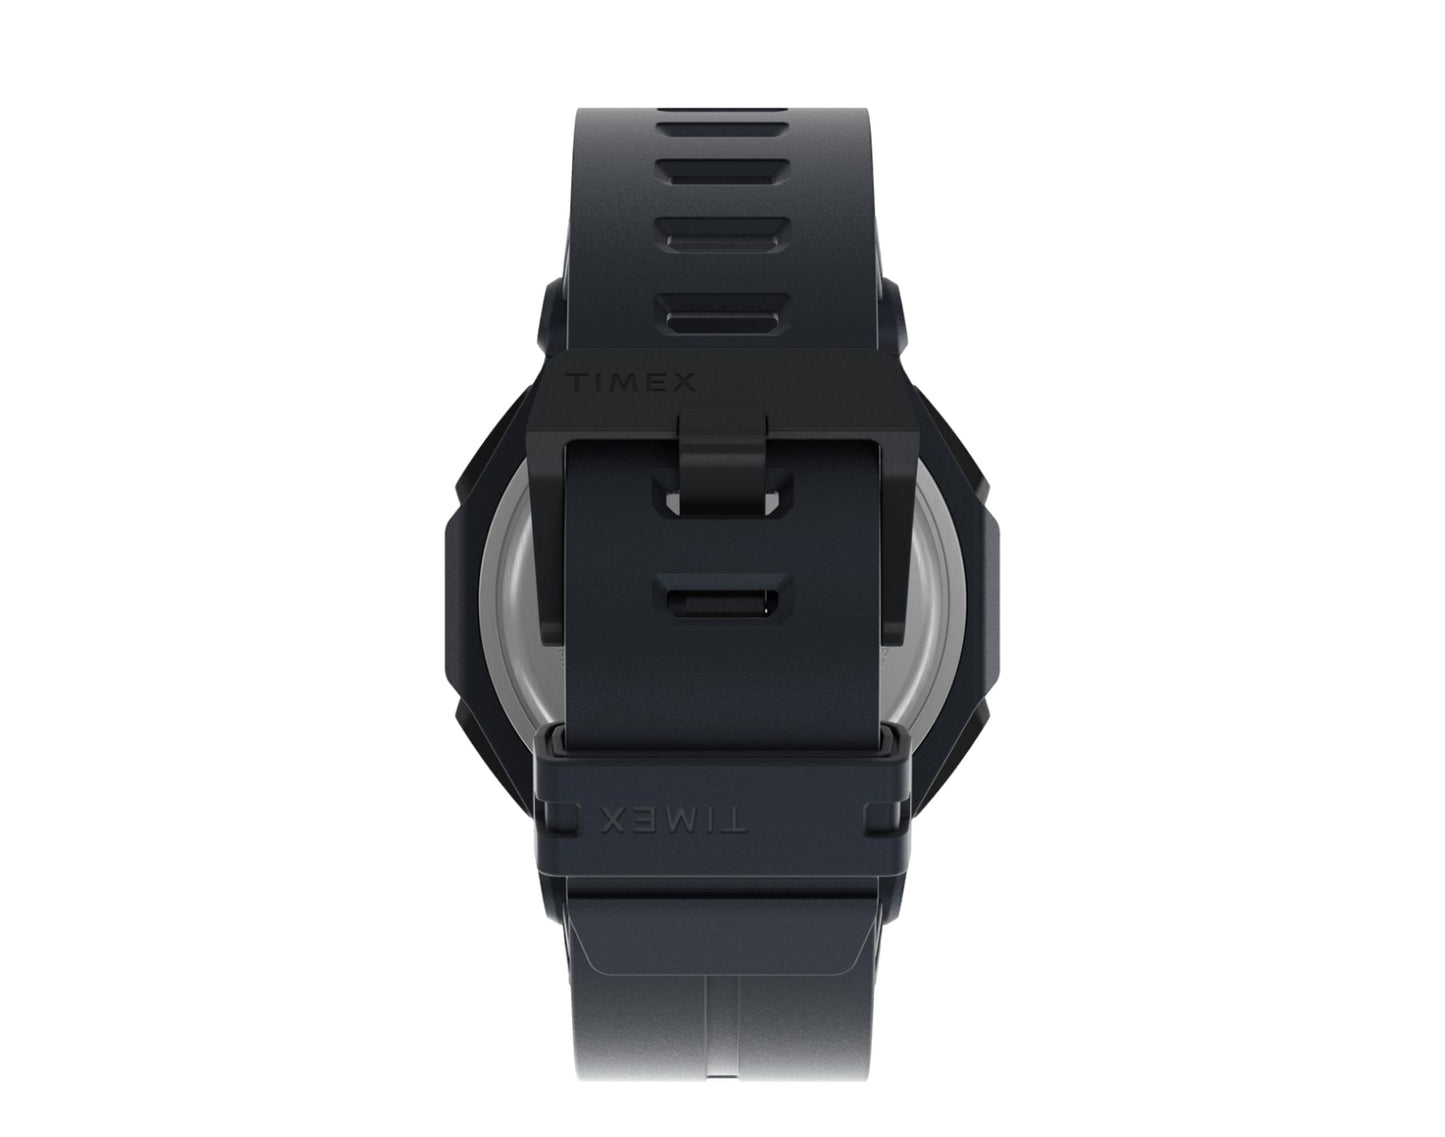 Timex Command Encounter 45mm Digital Resin Strap Watch